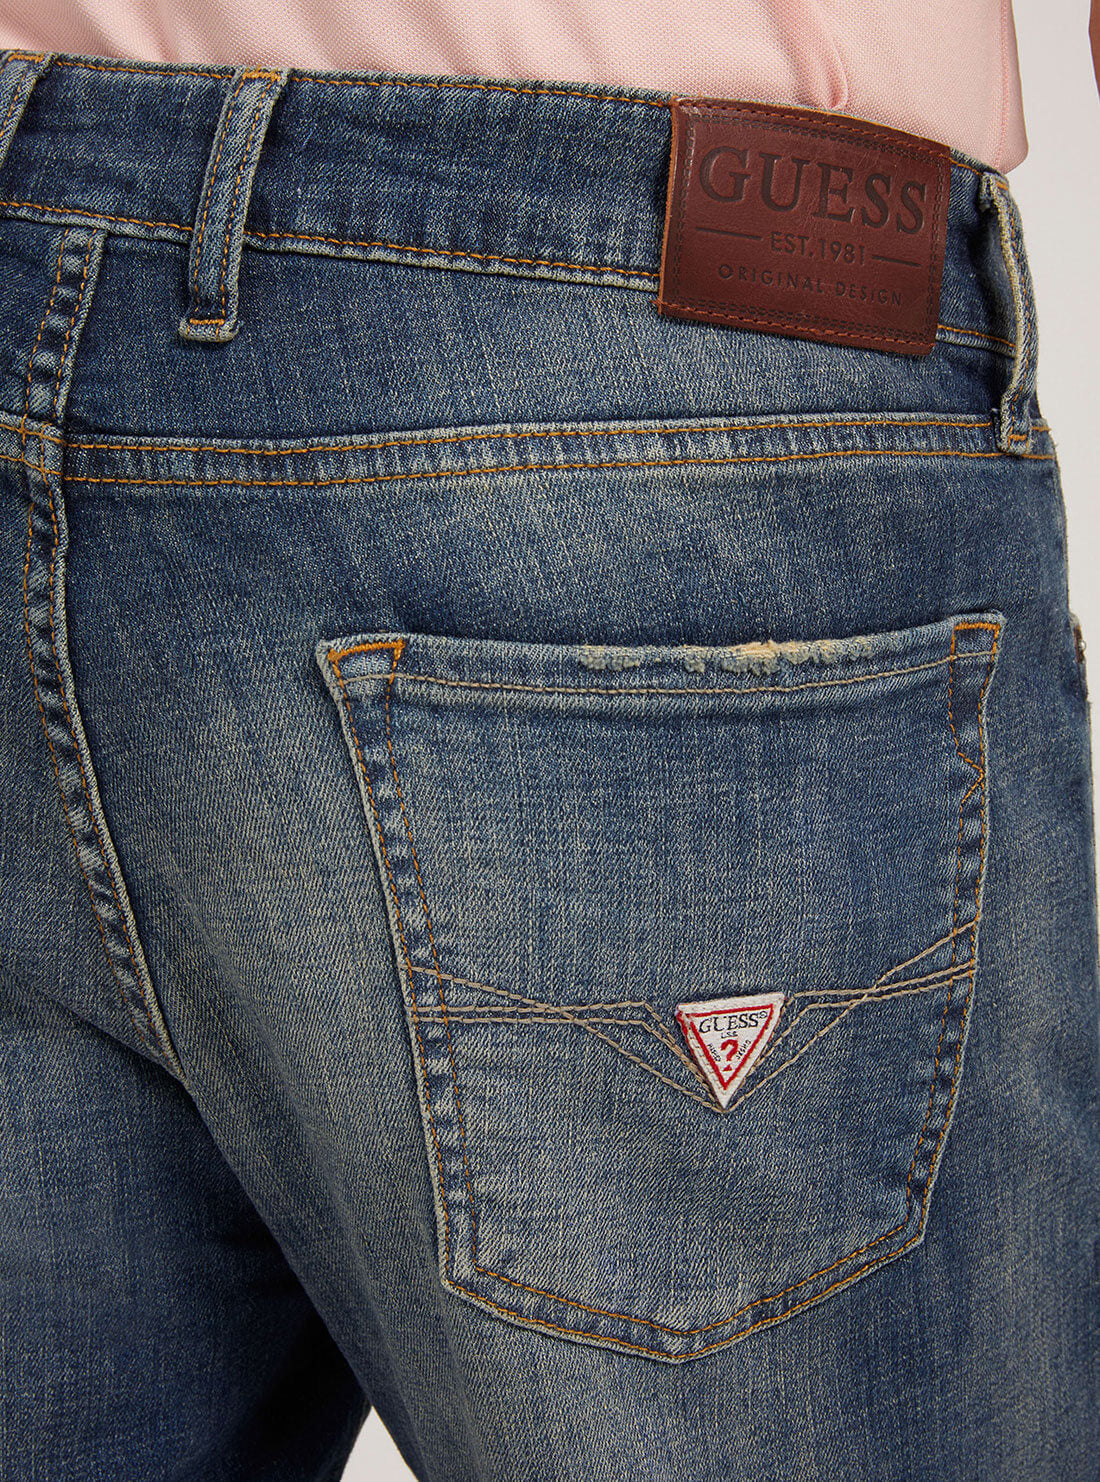 GUESS Mens Mid-Rise Regular Tapered Drake Denim Jeans in Reeno Wash M2GA37D4G23 Detail View